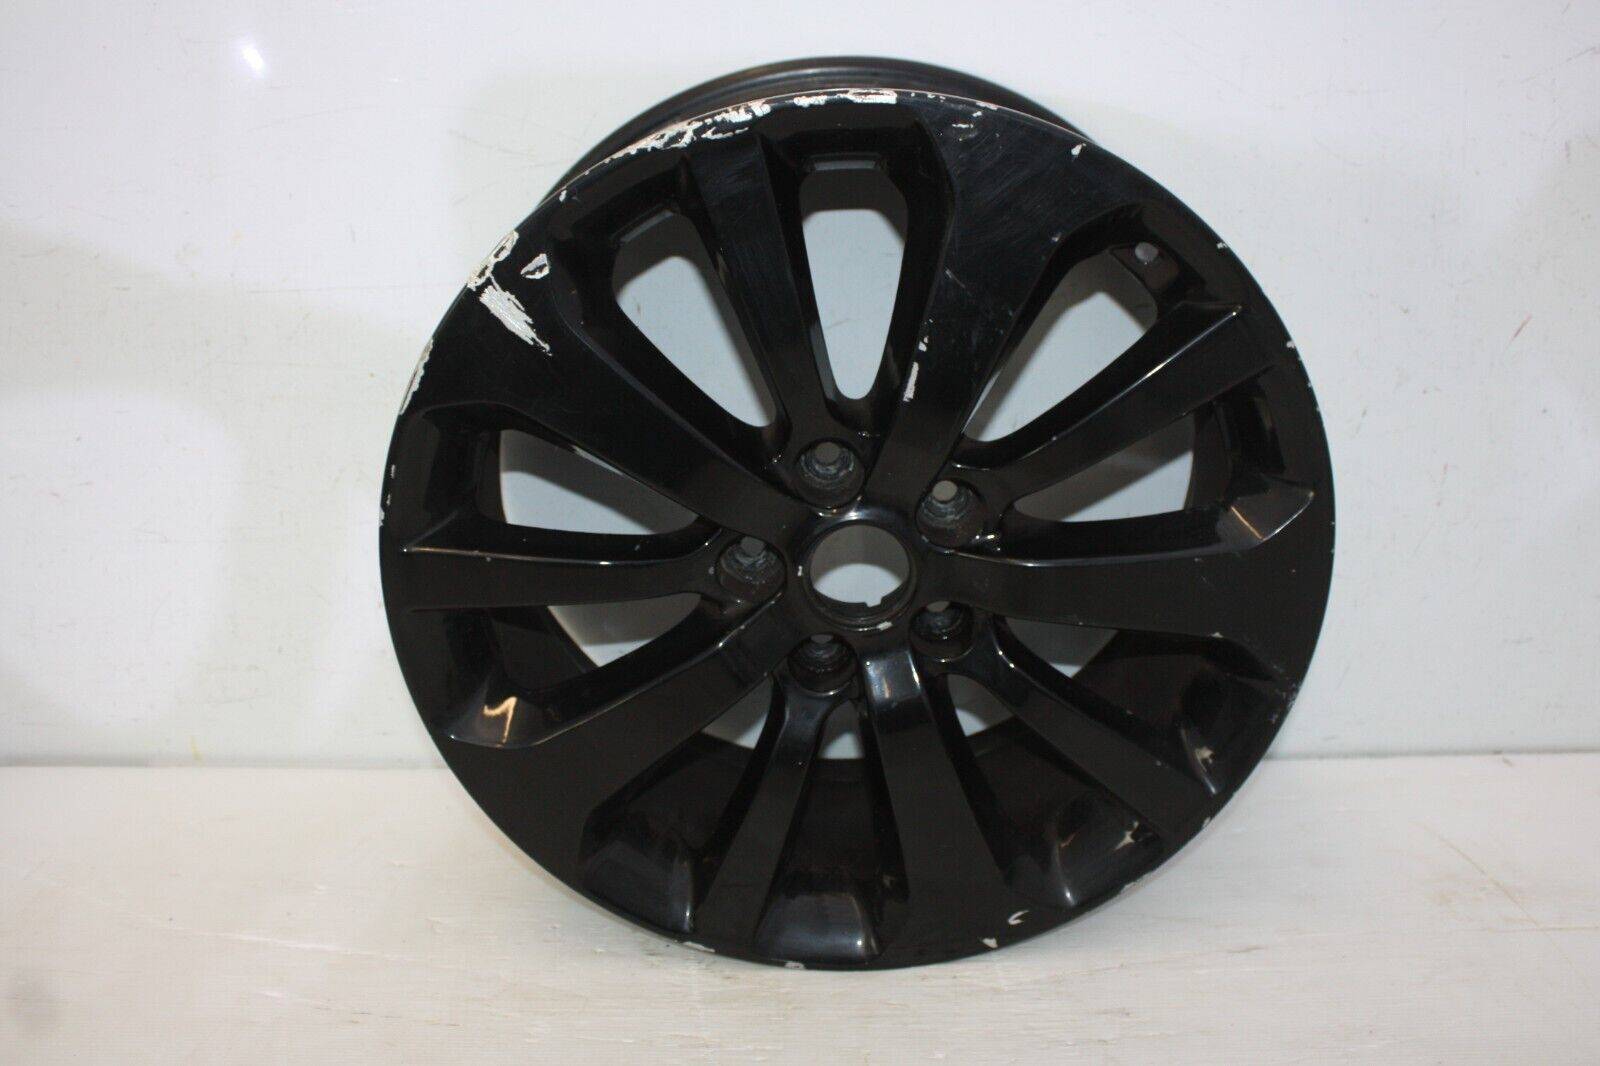 Kia Sorento 18 Alloy Wheel 52910 C5230 Genuine 175569657476